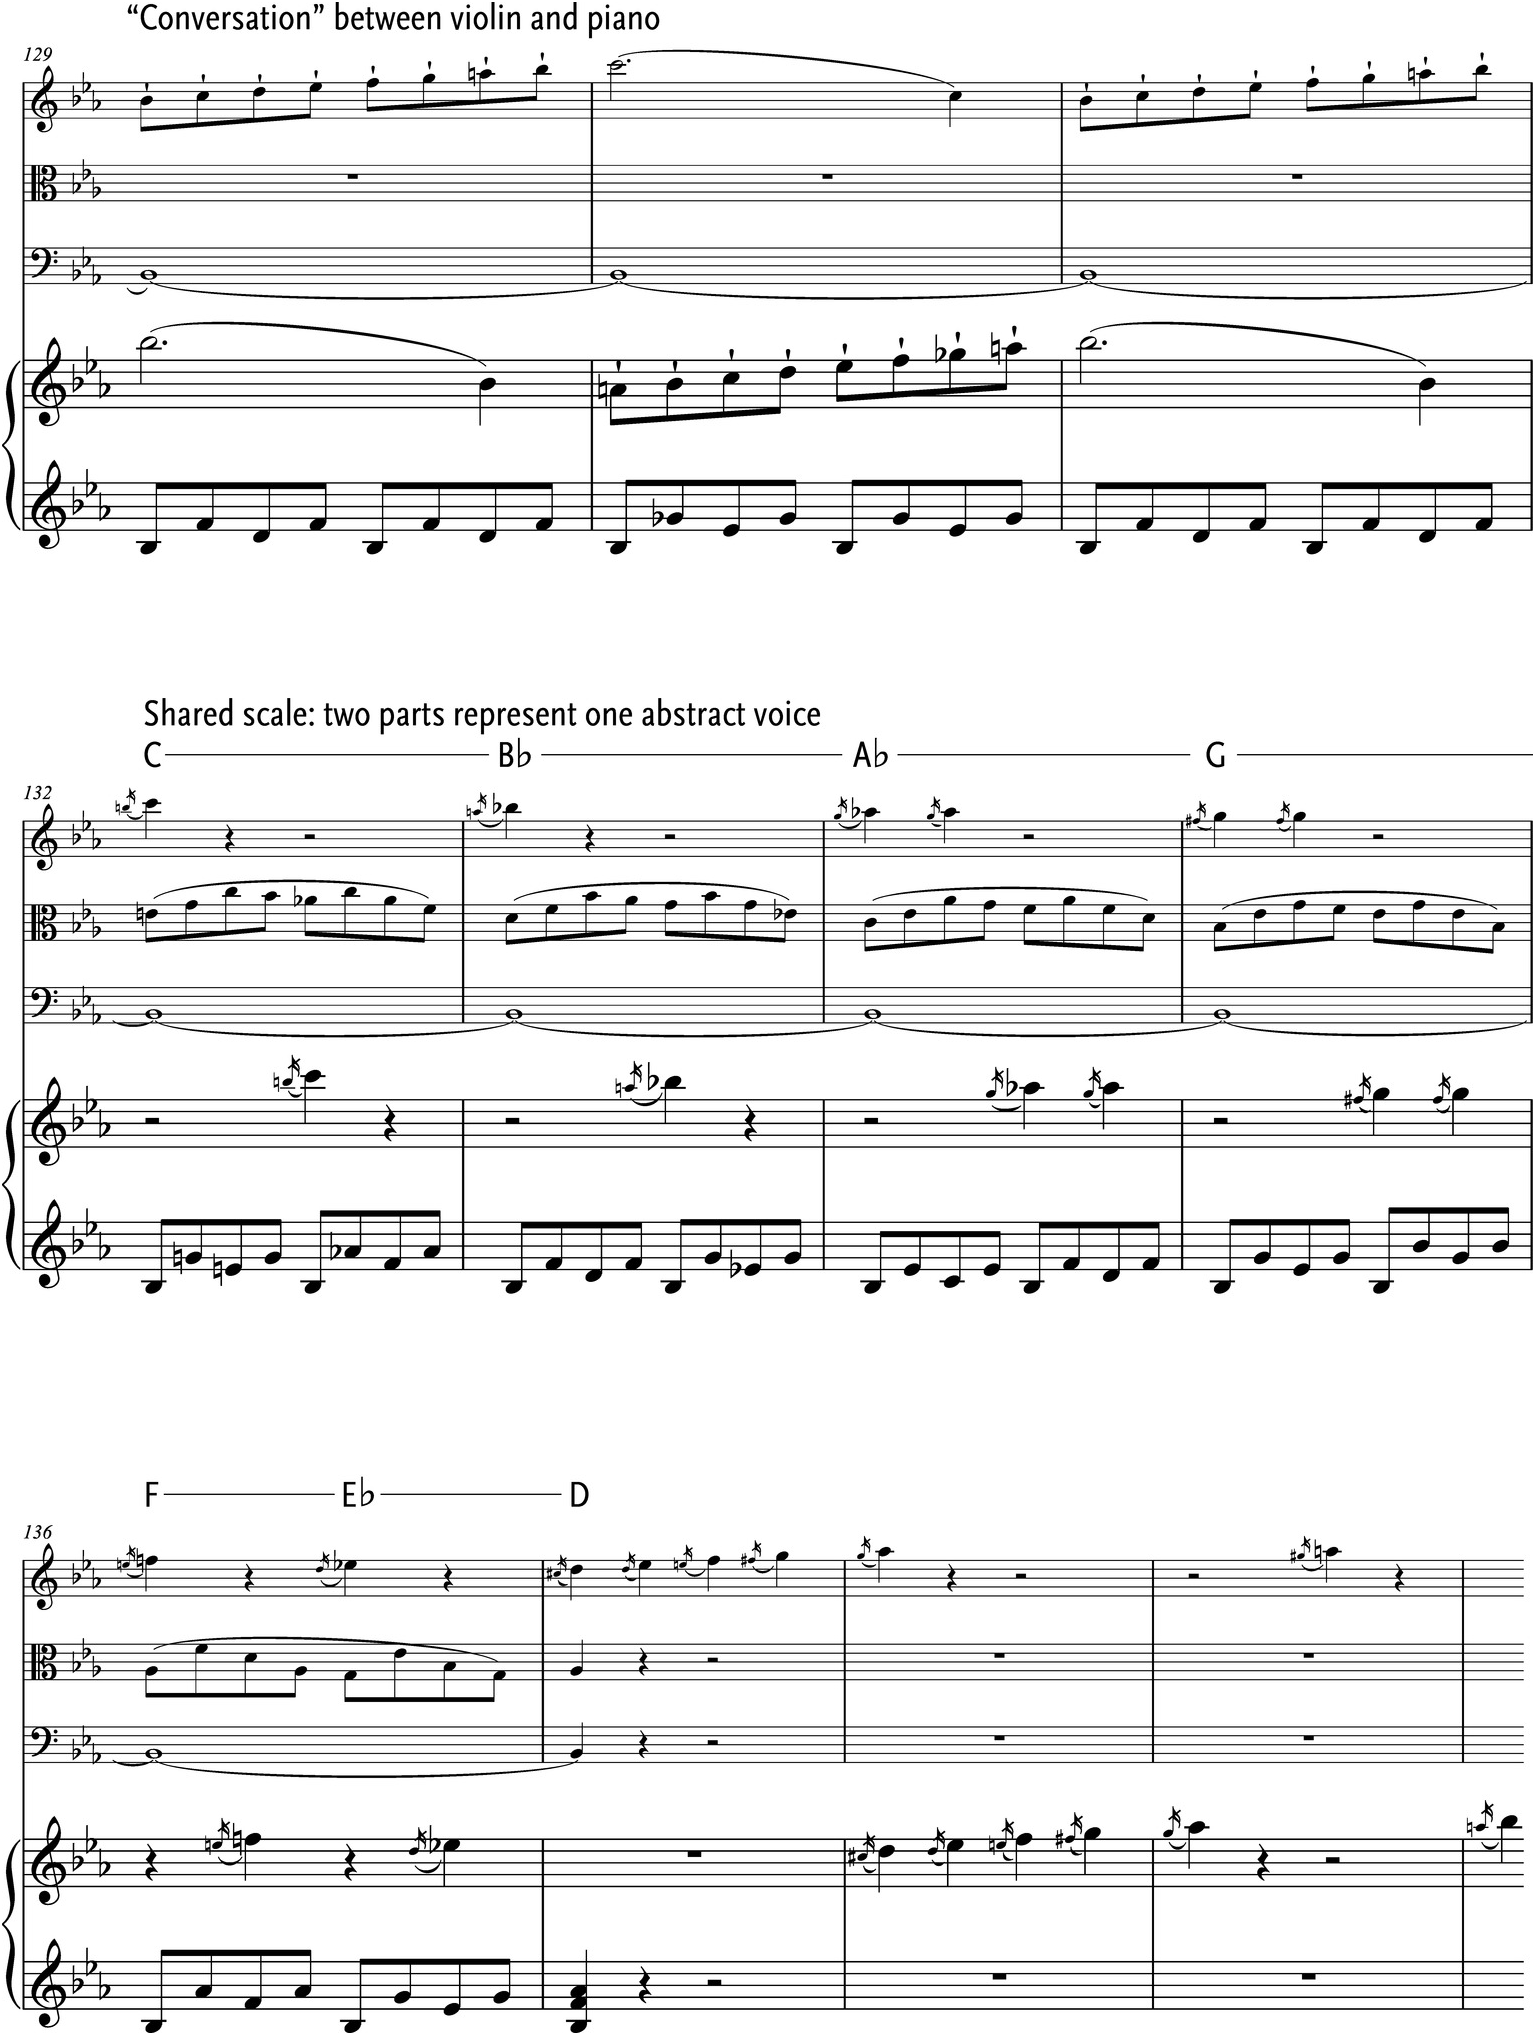 Duck Life 2 - Piano Theme Sheet music for Piano (Mixed Quintet